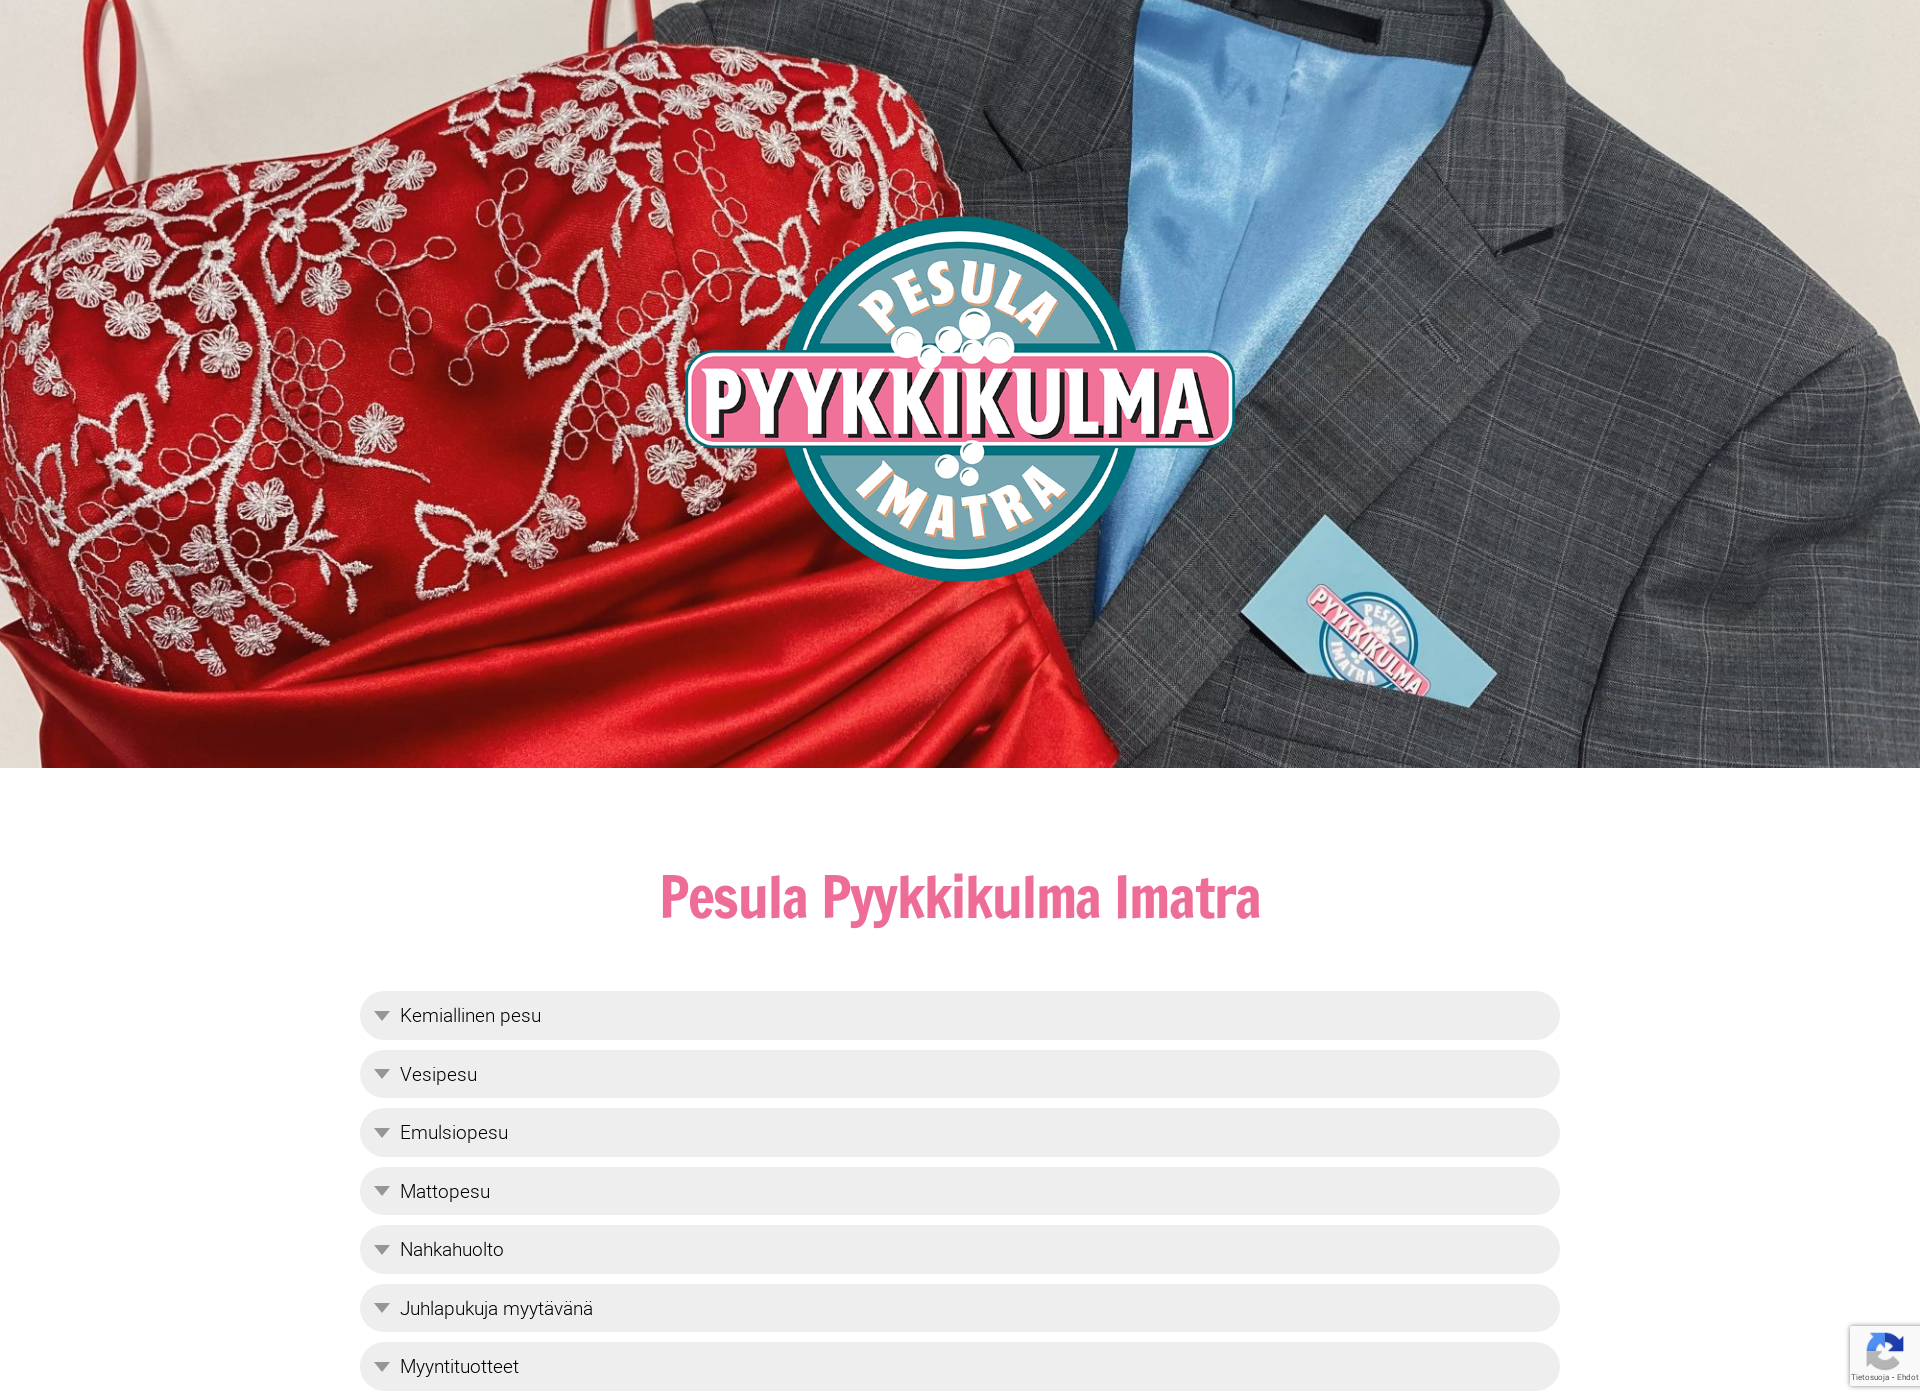 Näyttökuva pesulaimatra.fi